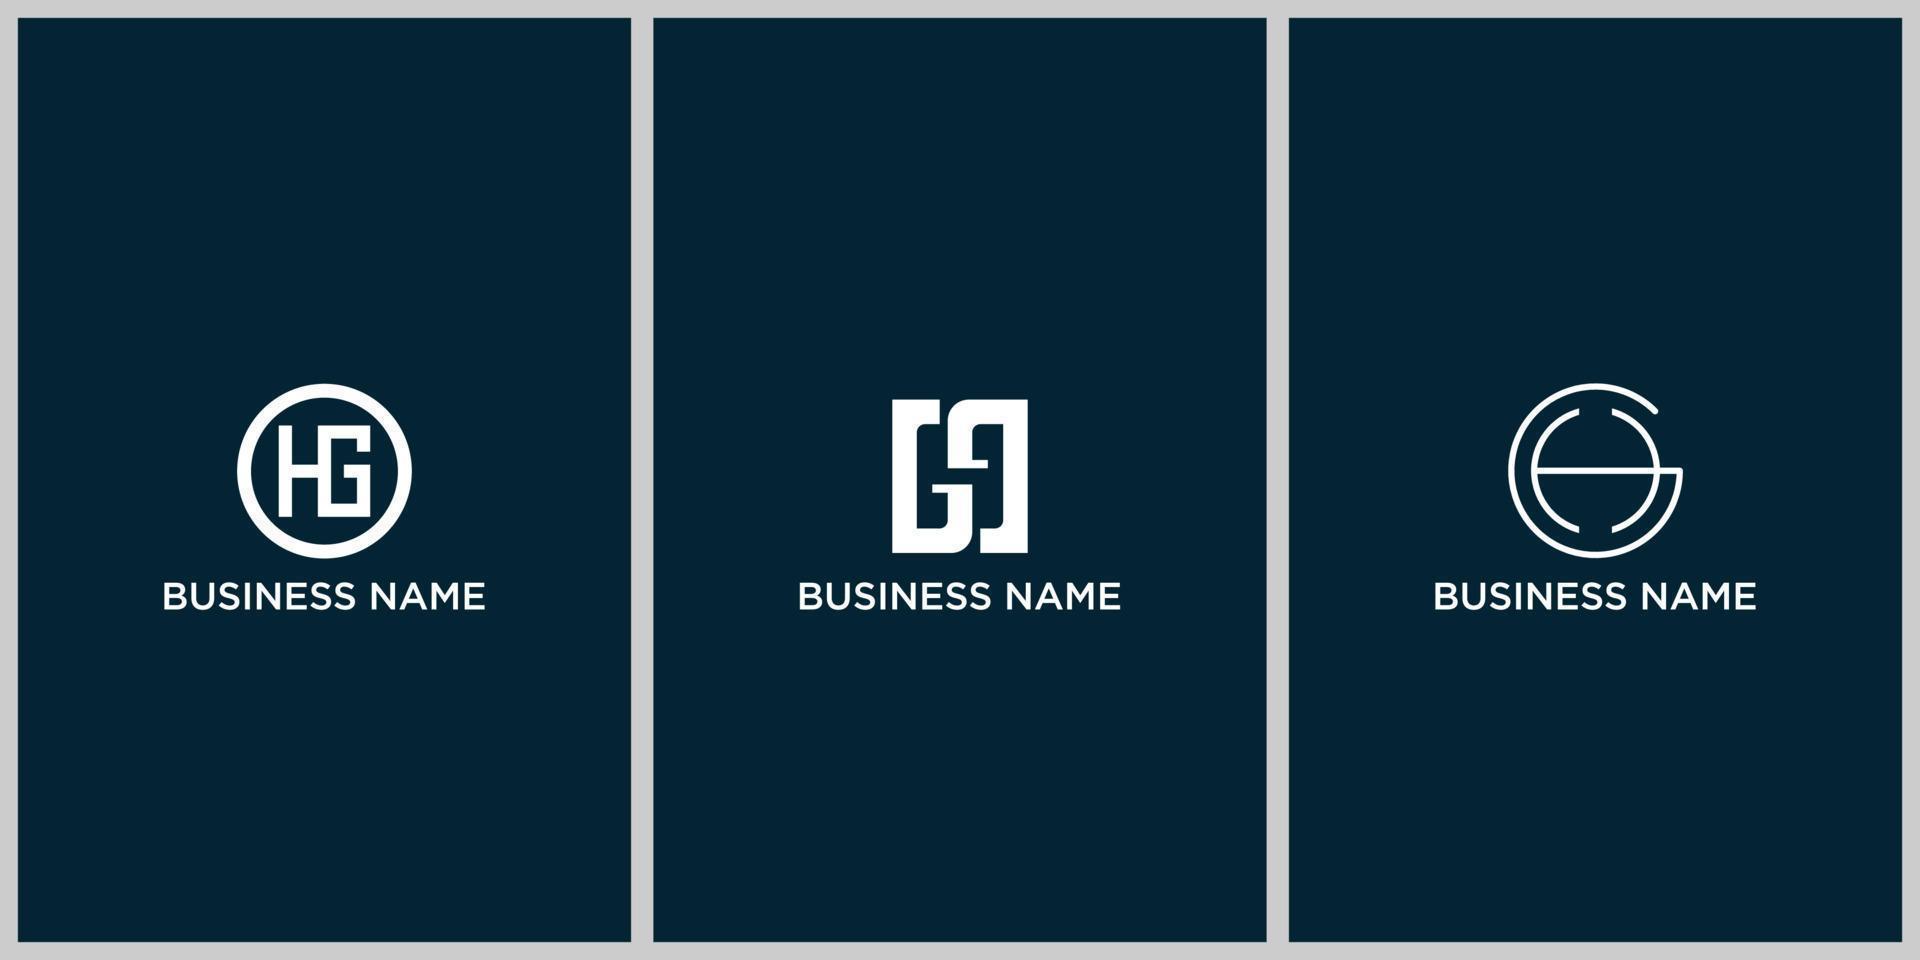 conjunto de modelo de design de logotipo hg de carta criativa vetor premium